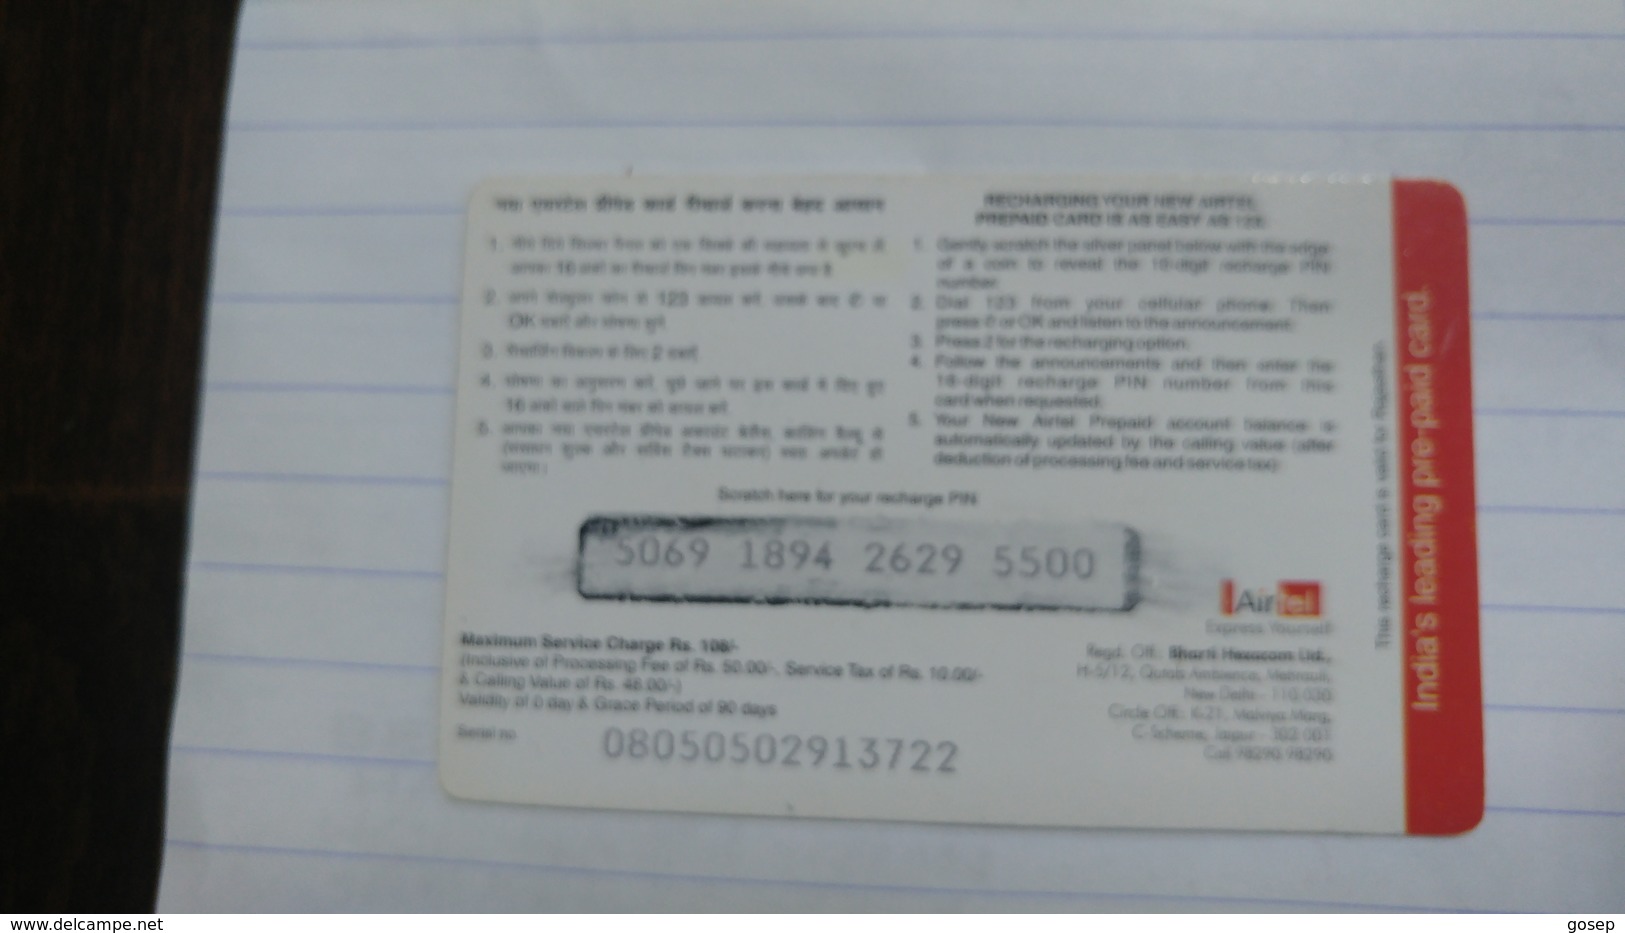 India-airtel Aisi Azadi Aur Kahaan(57)(rs.108)(new Delhi)(5069189426295500)(look Out Side)used Card+1 Card Prepiad Free - Indien